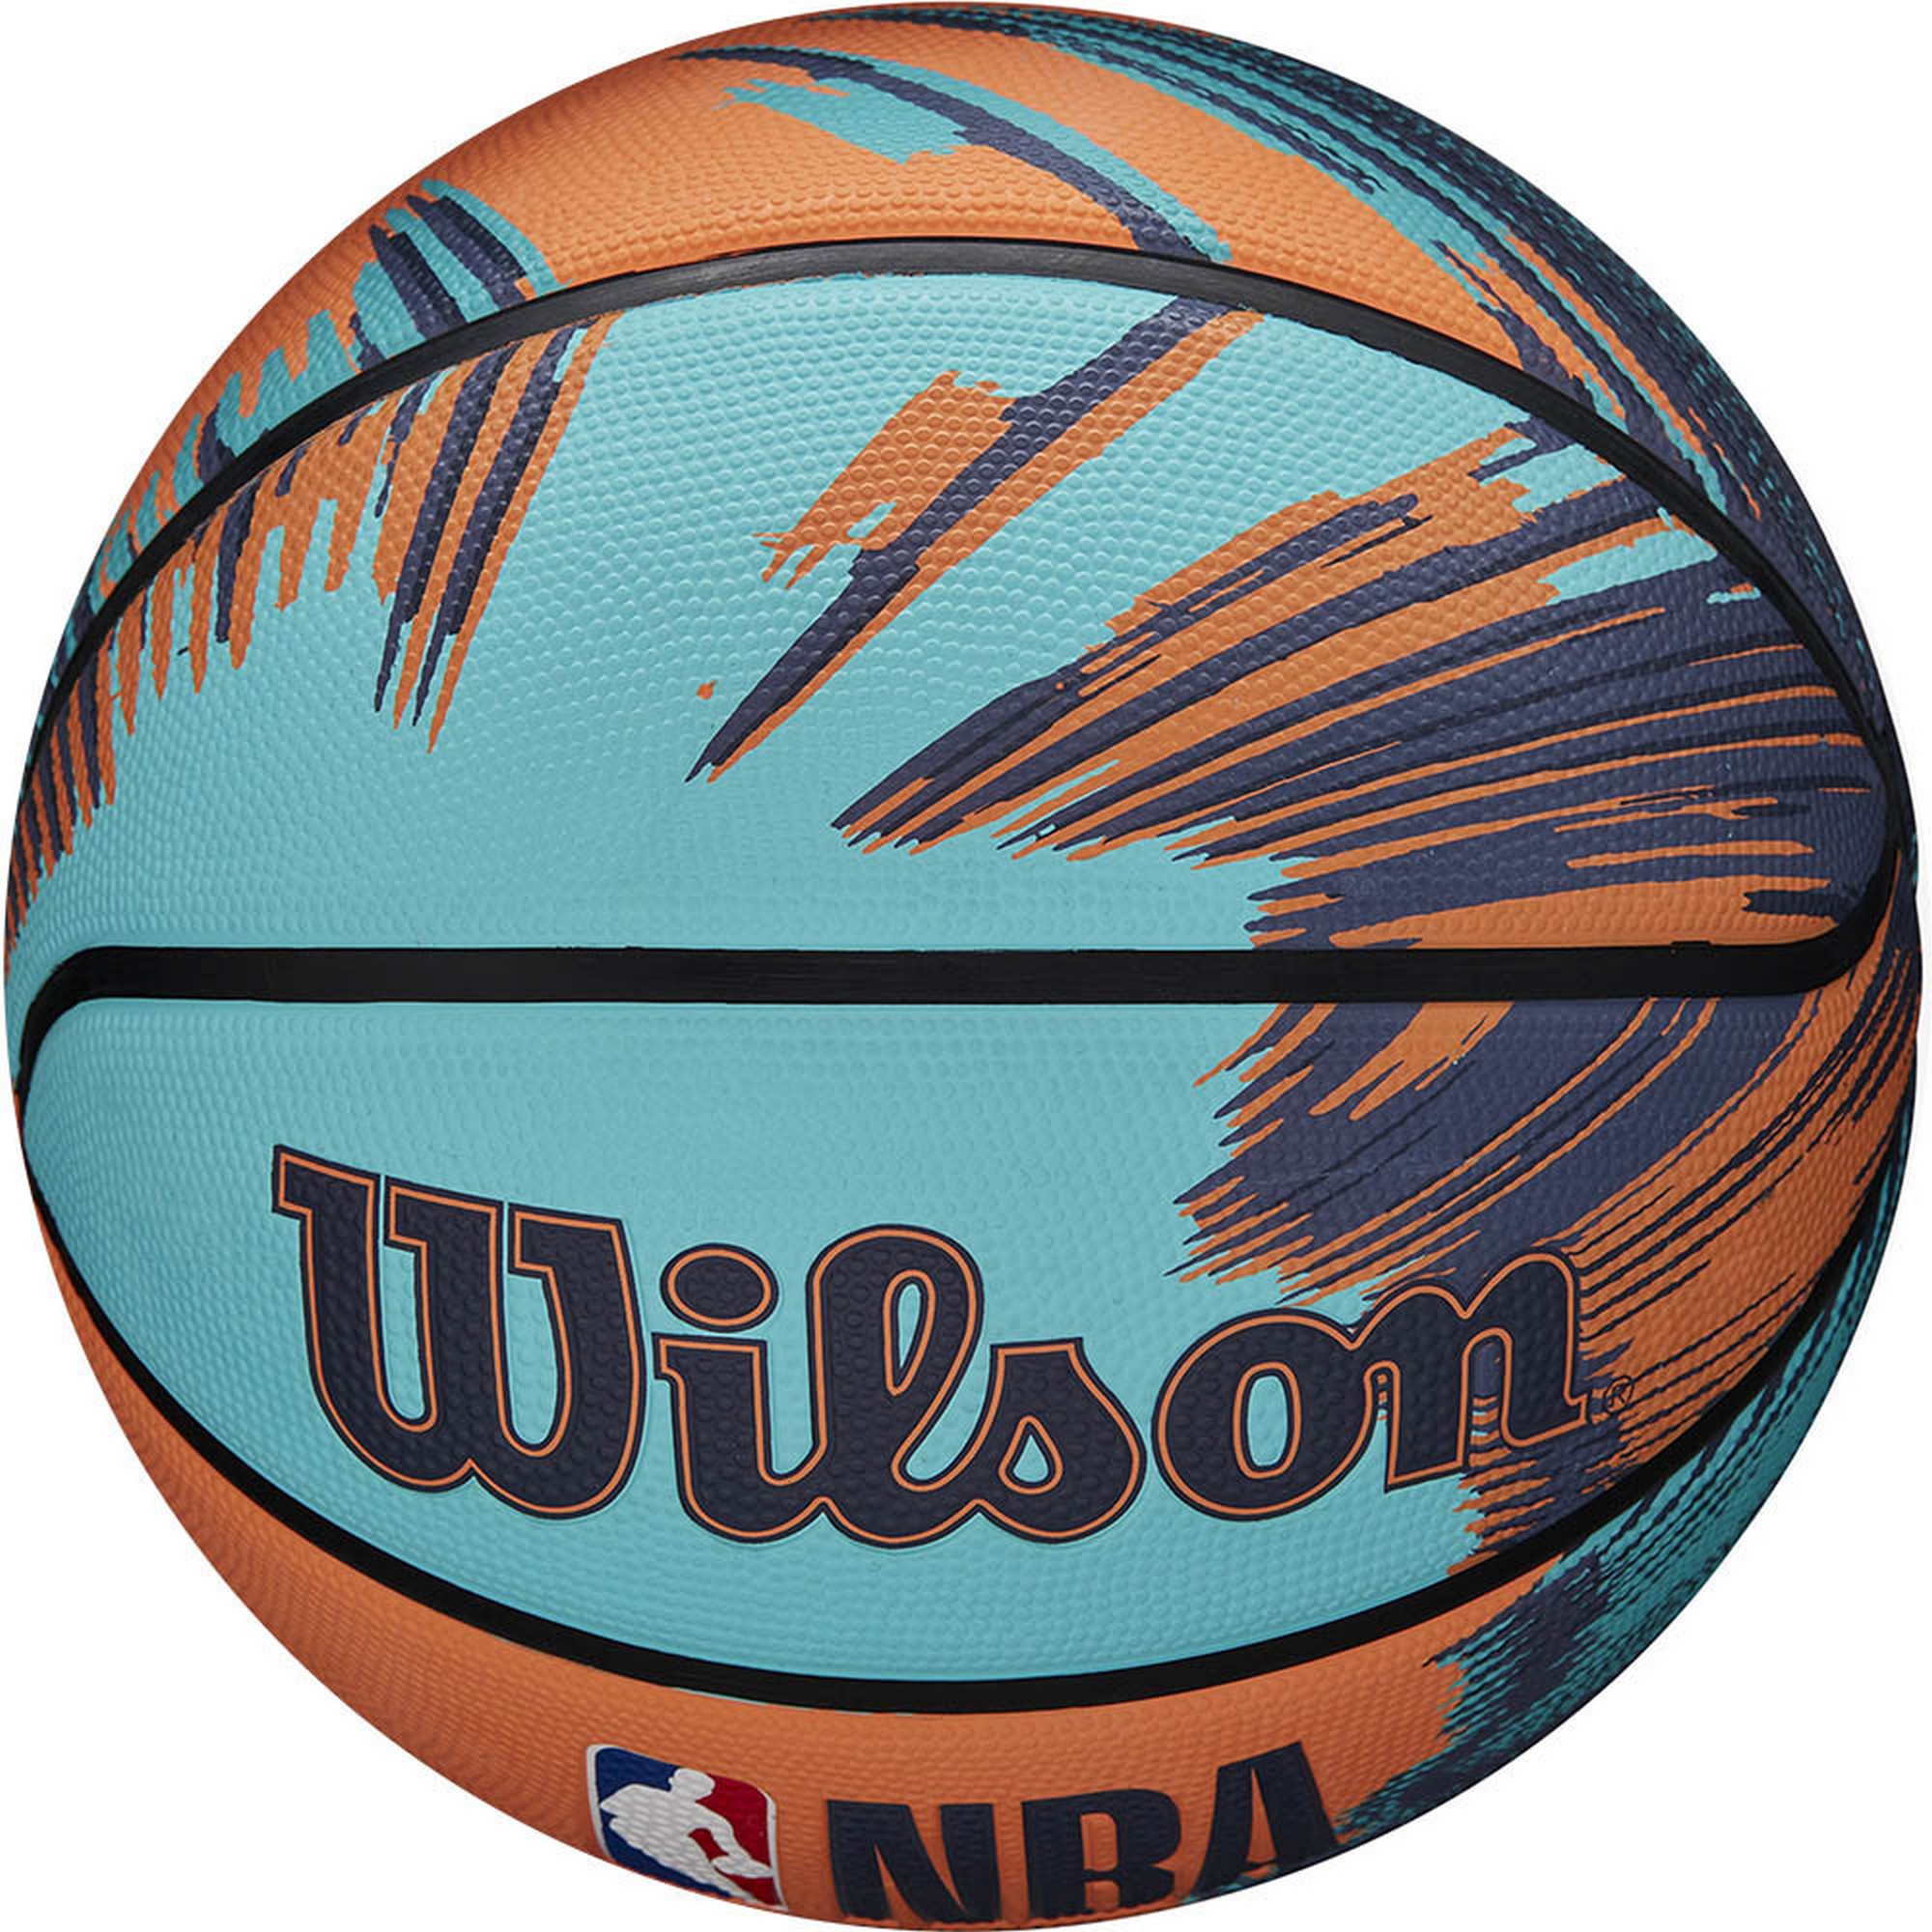 Мяч баскетбольный Wilson NBA DRV PRO STREAK BSKT WZ3012501XB6 р.6 2000_2000